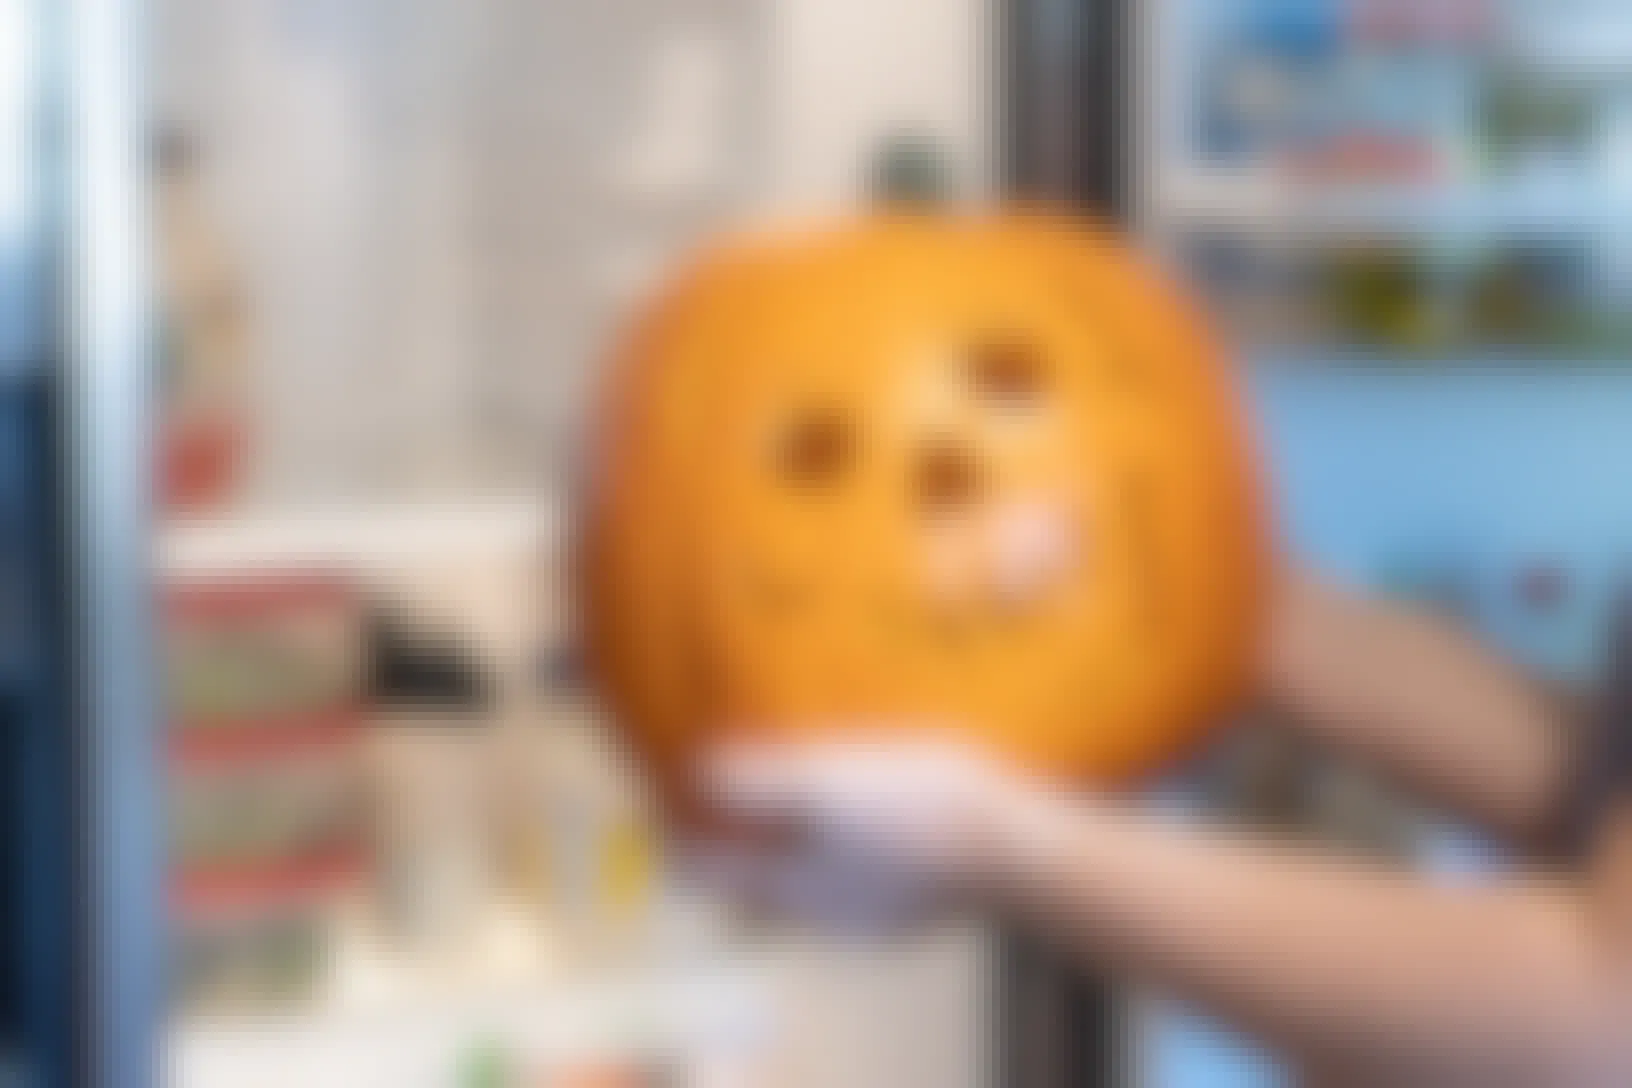 Someone putting a carved pumpkin into a refrigerator